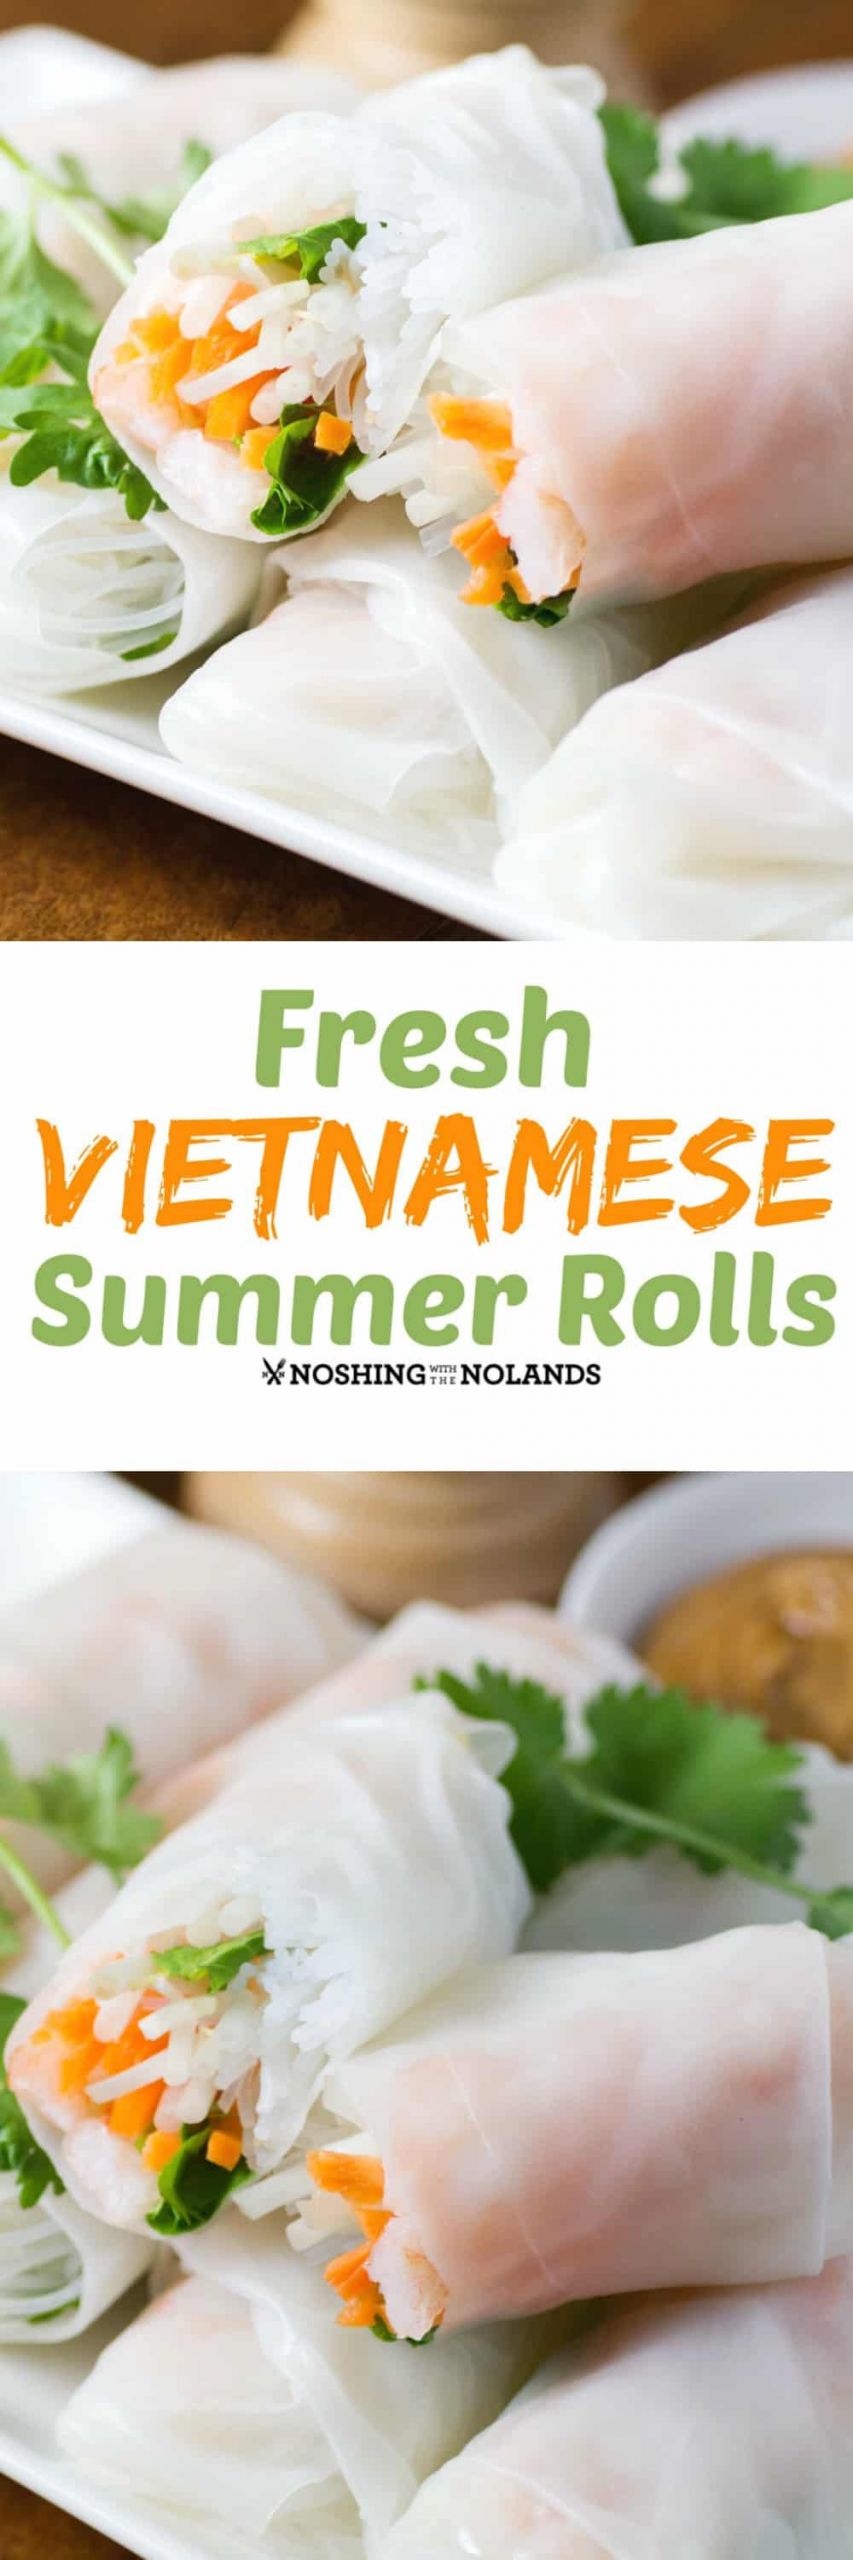 Authentic Vietnamese Summer Rolls Recipe
 Fresh Vietnamese Summer Rolls